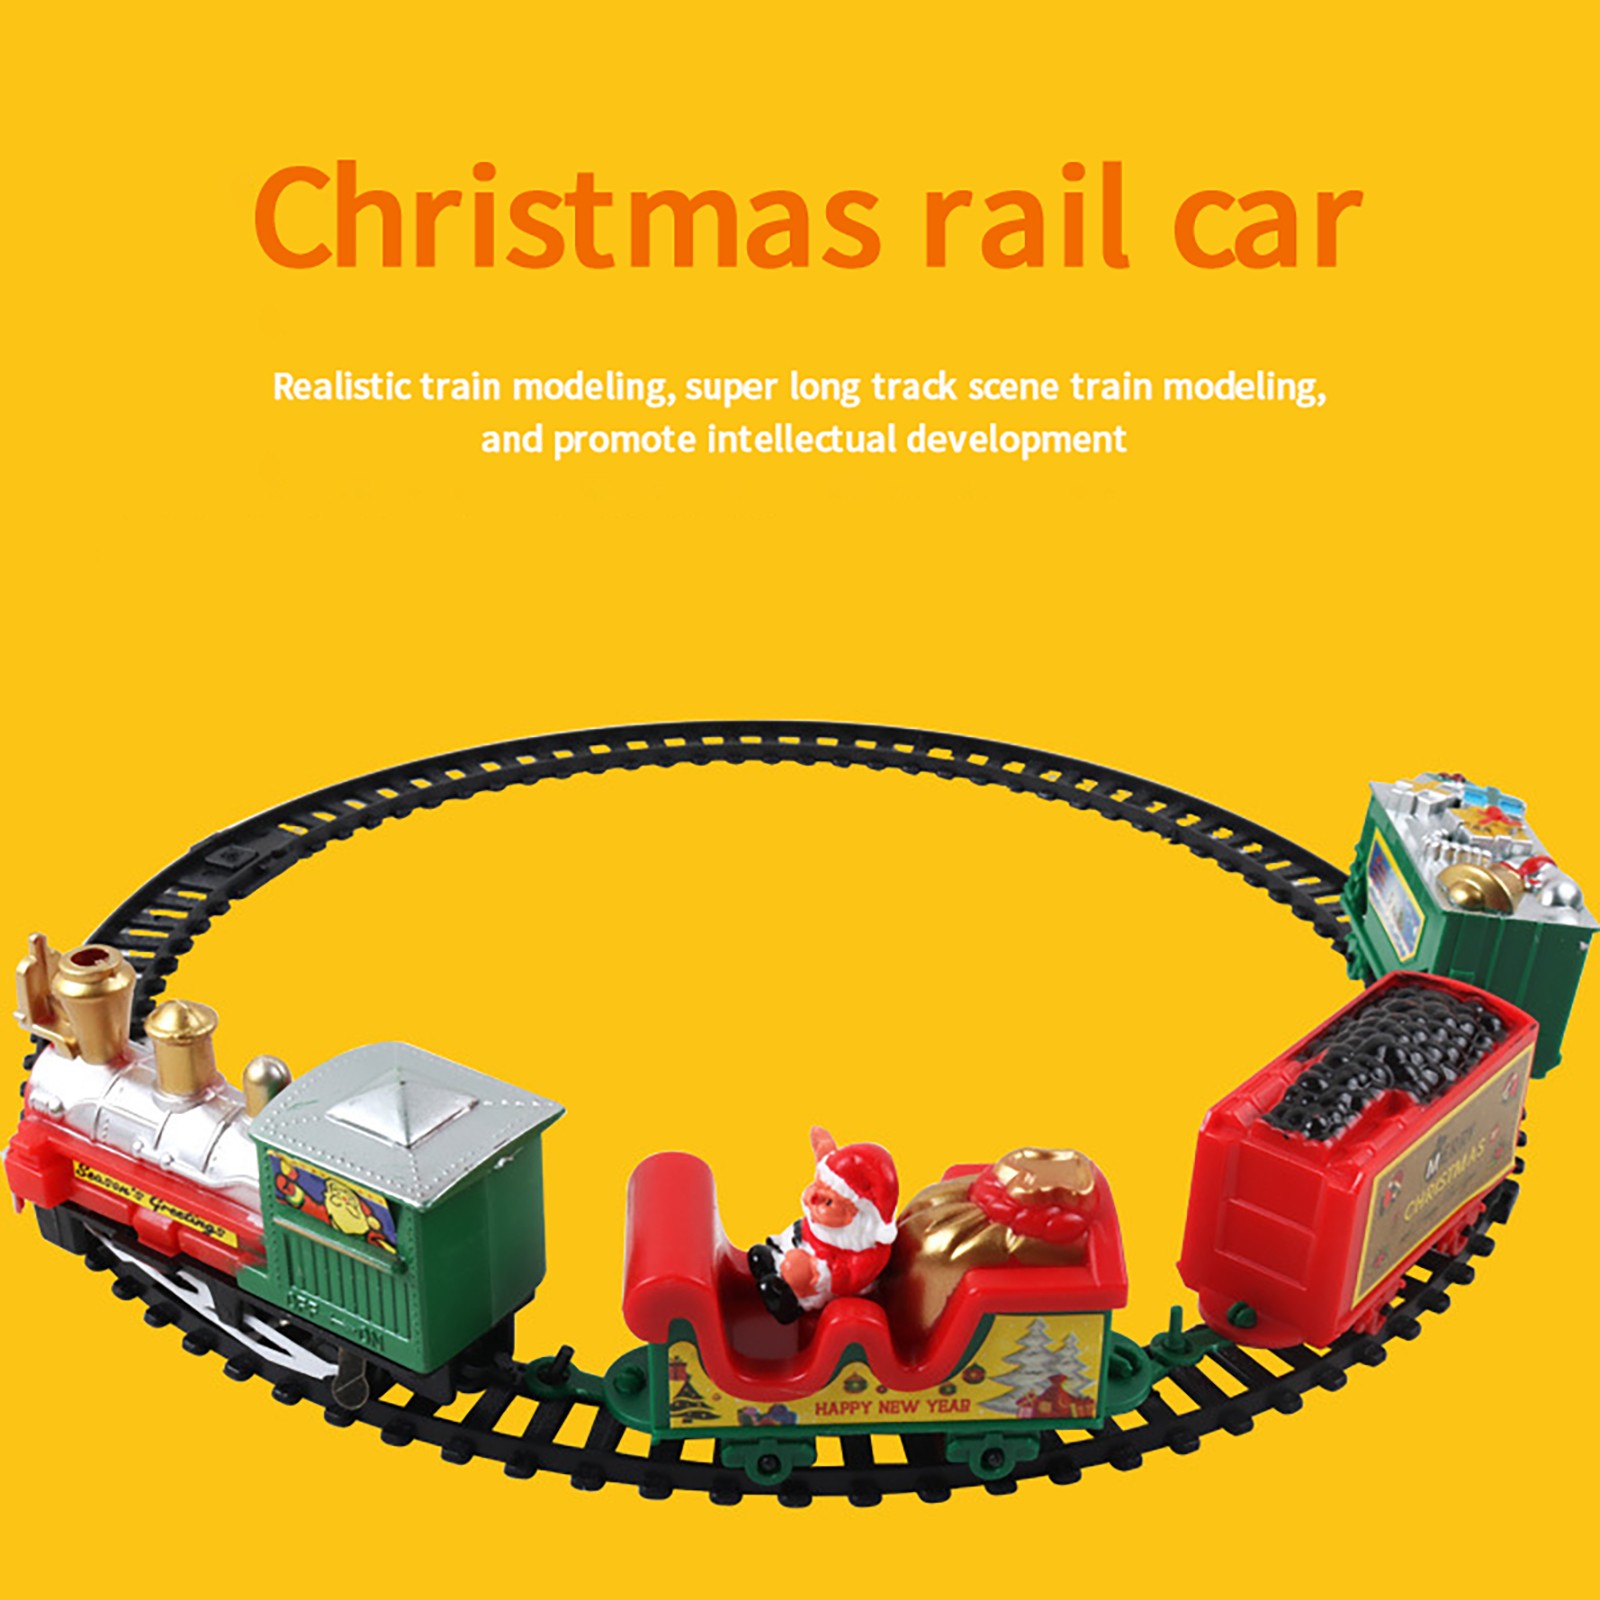 2022 Christmas Train Electric Toy Christmas Tree Decoration Train Track Frame Railway Car With Realistic Rail Car Christmas Gift